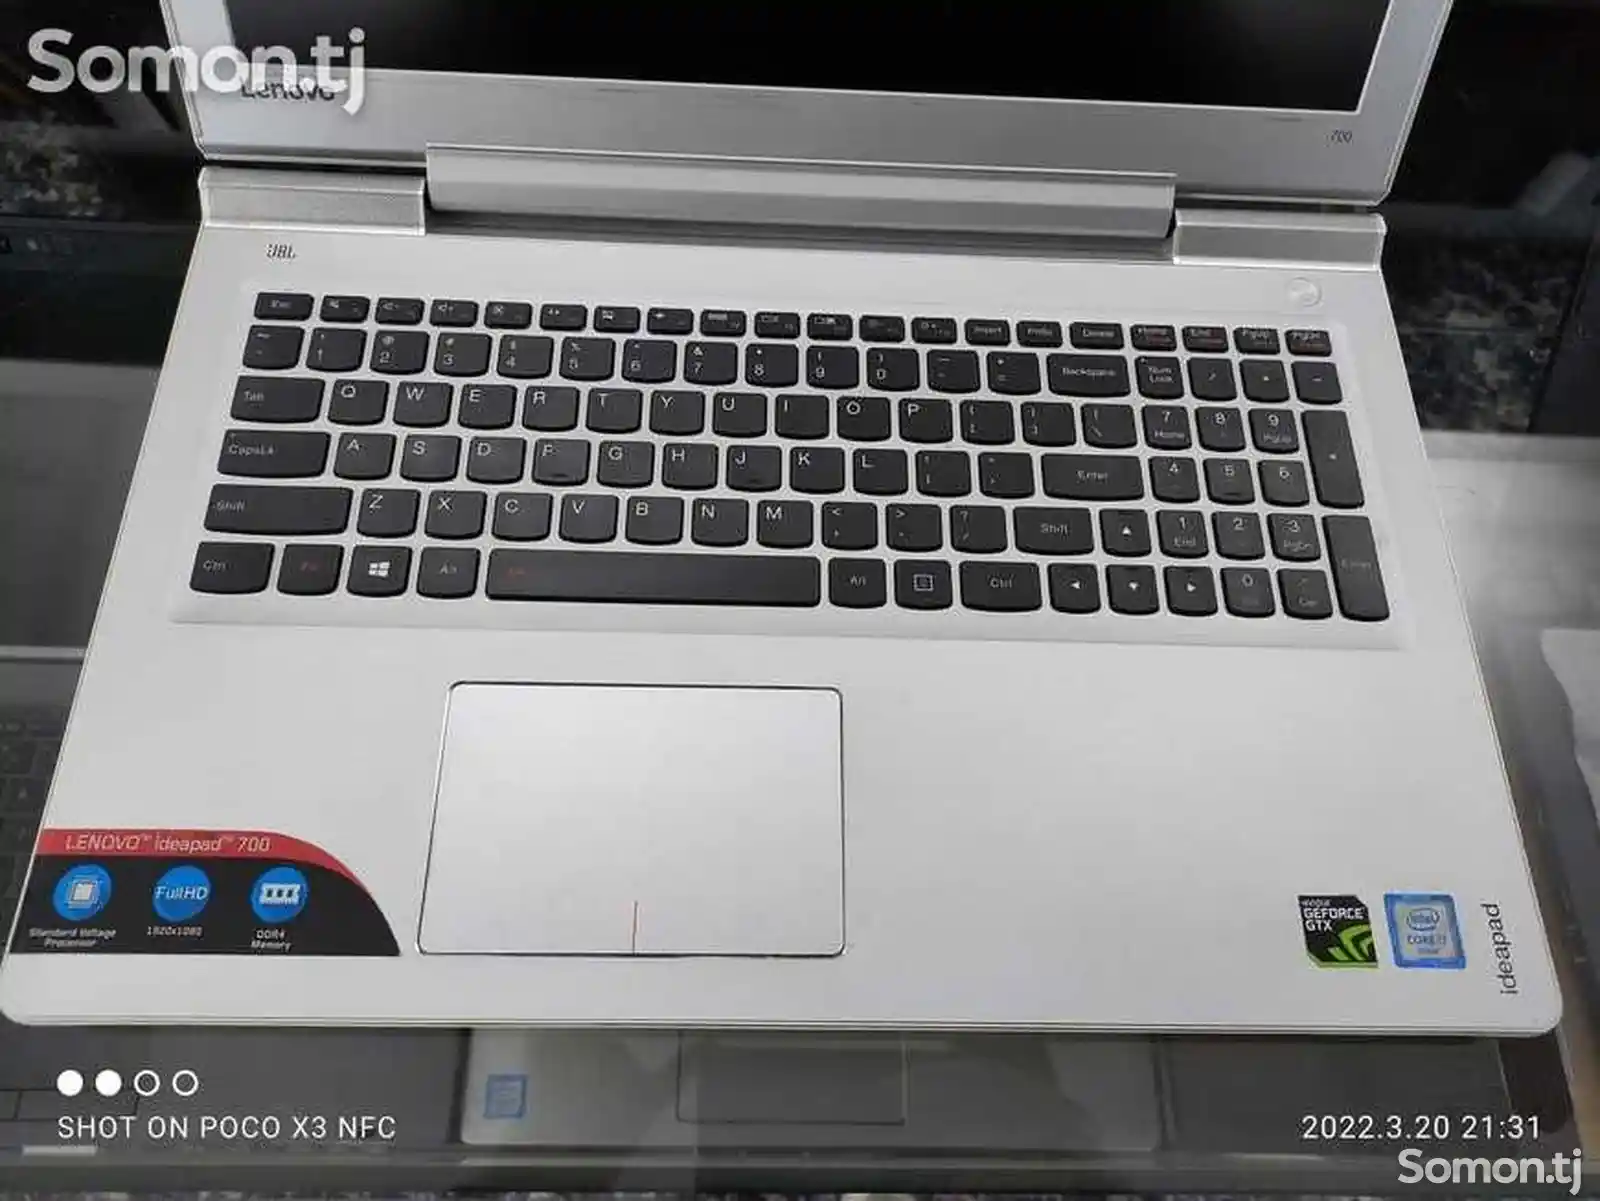 Игровой Ноутбук Lenovo Ideapad 700 Core i7-6700HQ GTX 950M 2Gb-4